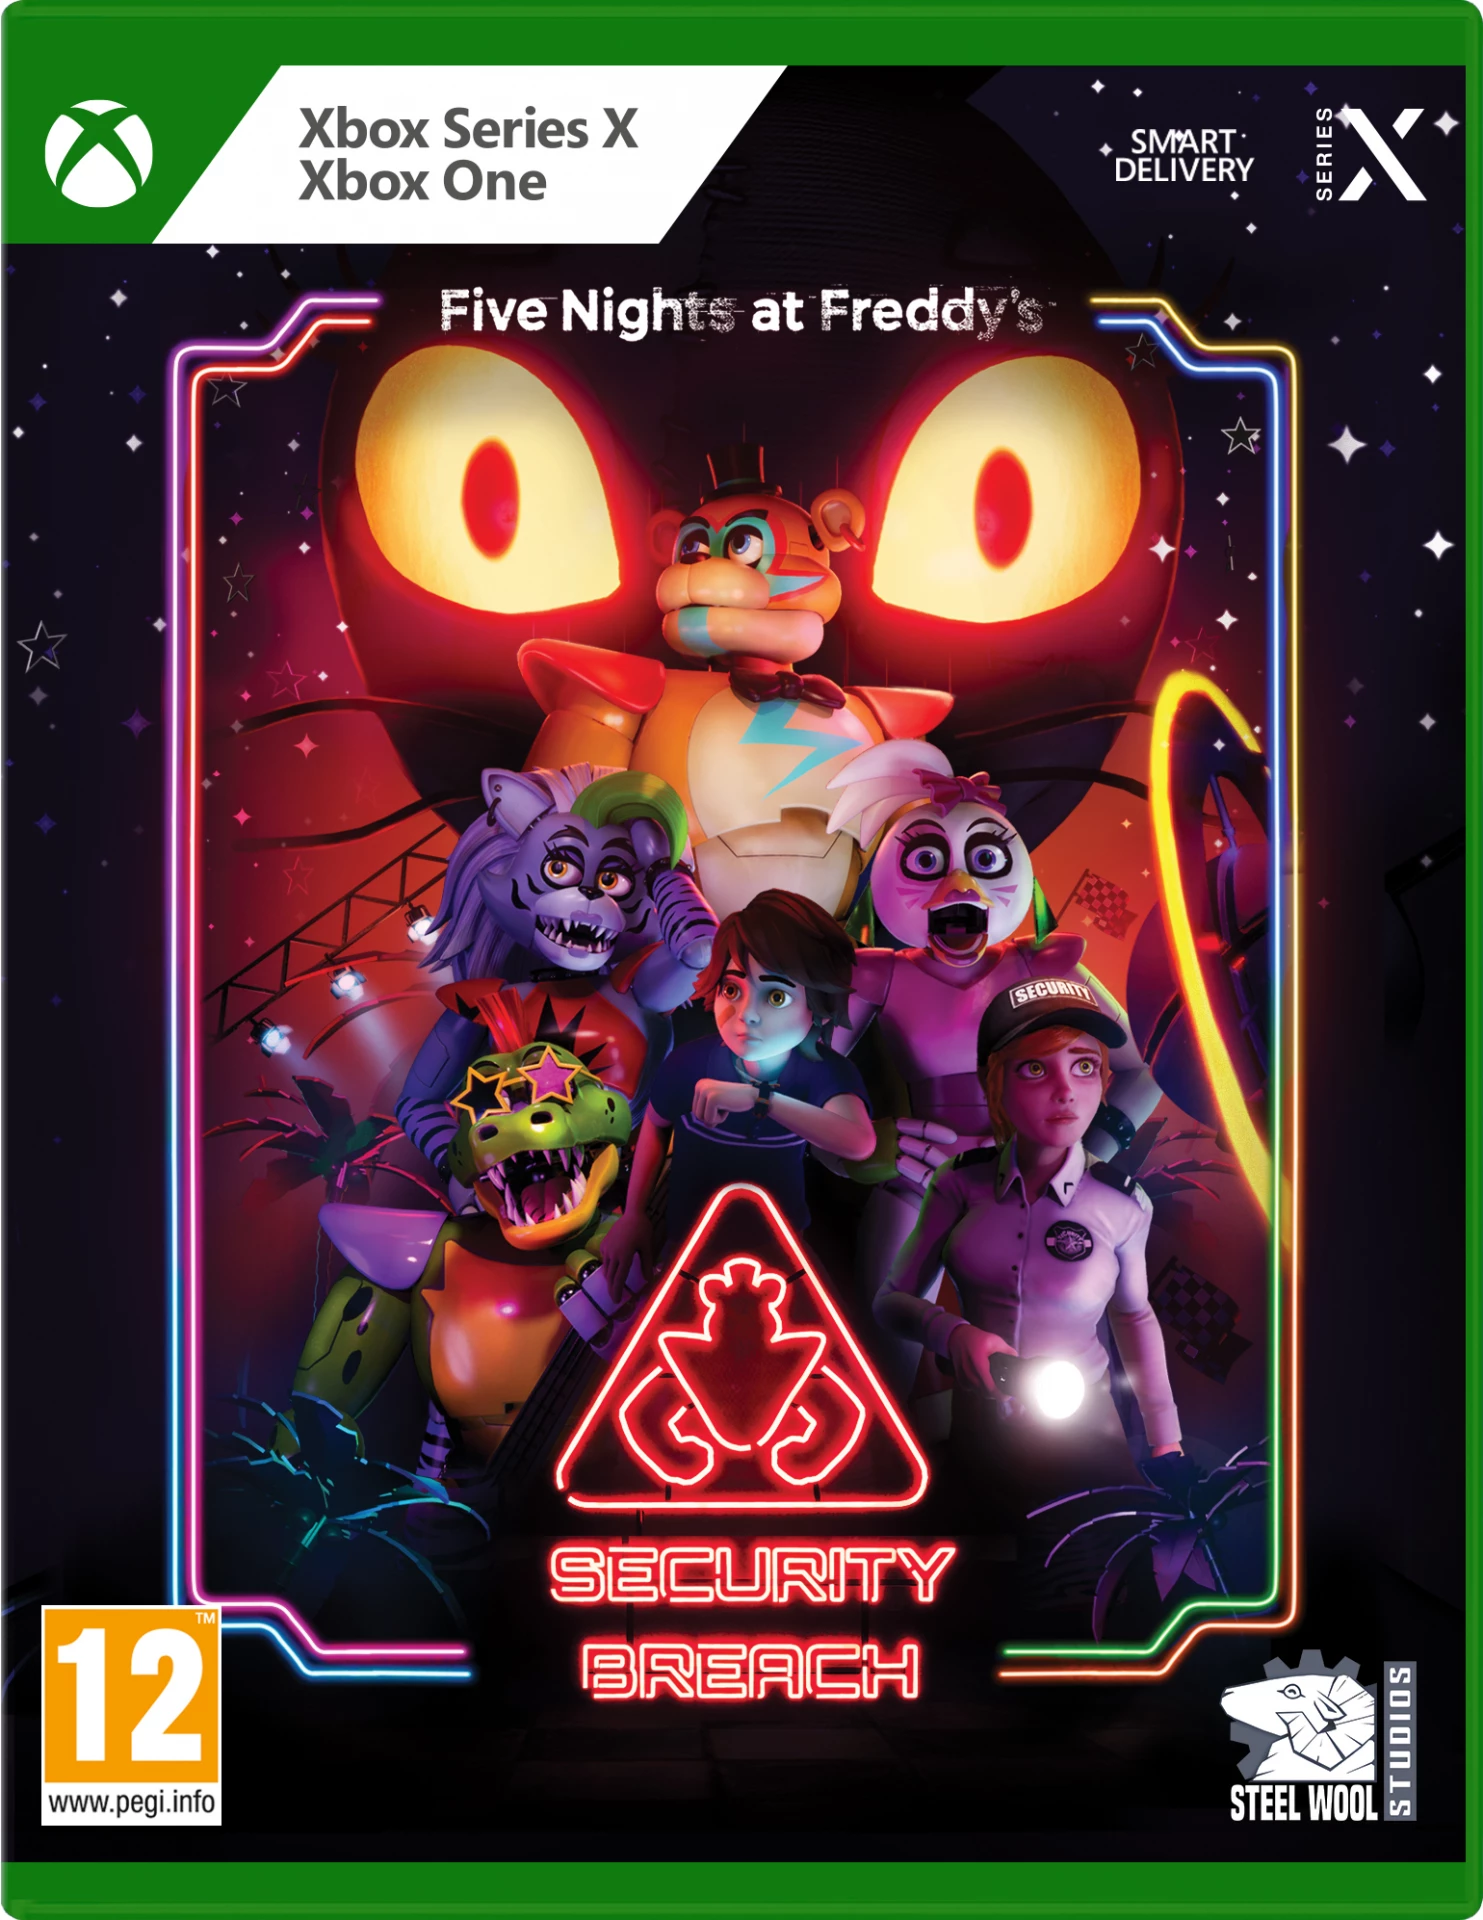 Five Nights at Freddy's: Security Breach (Xbox Series X), Steel Wool Studio's